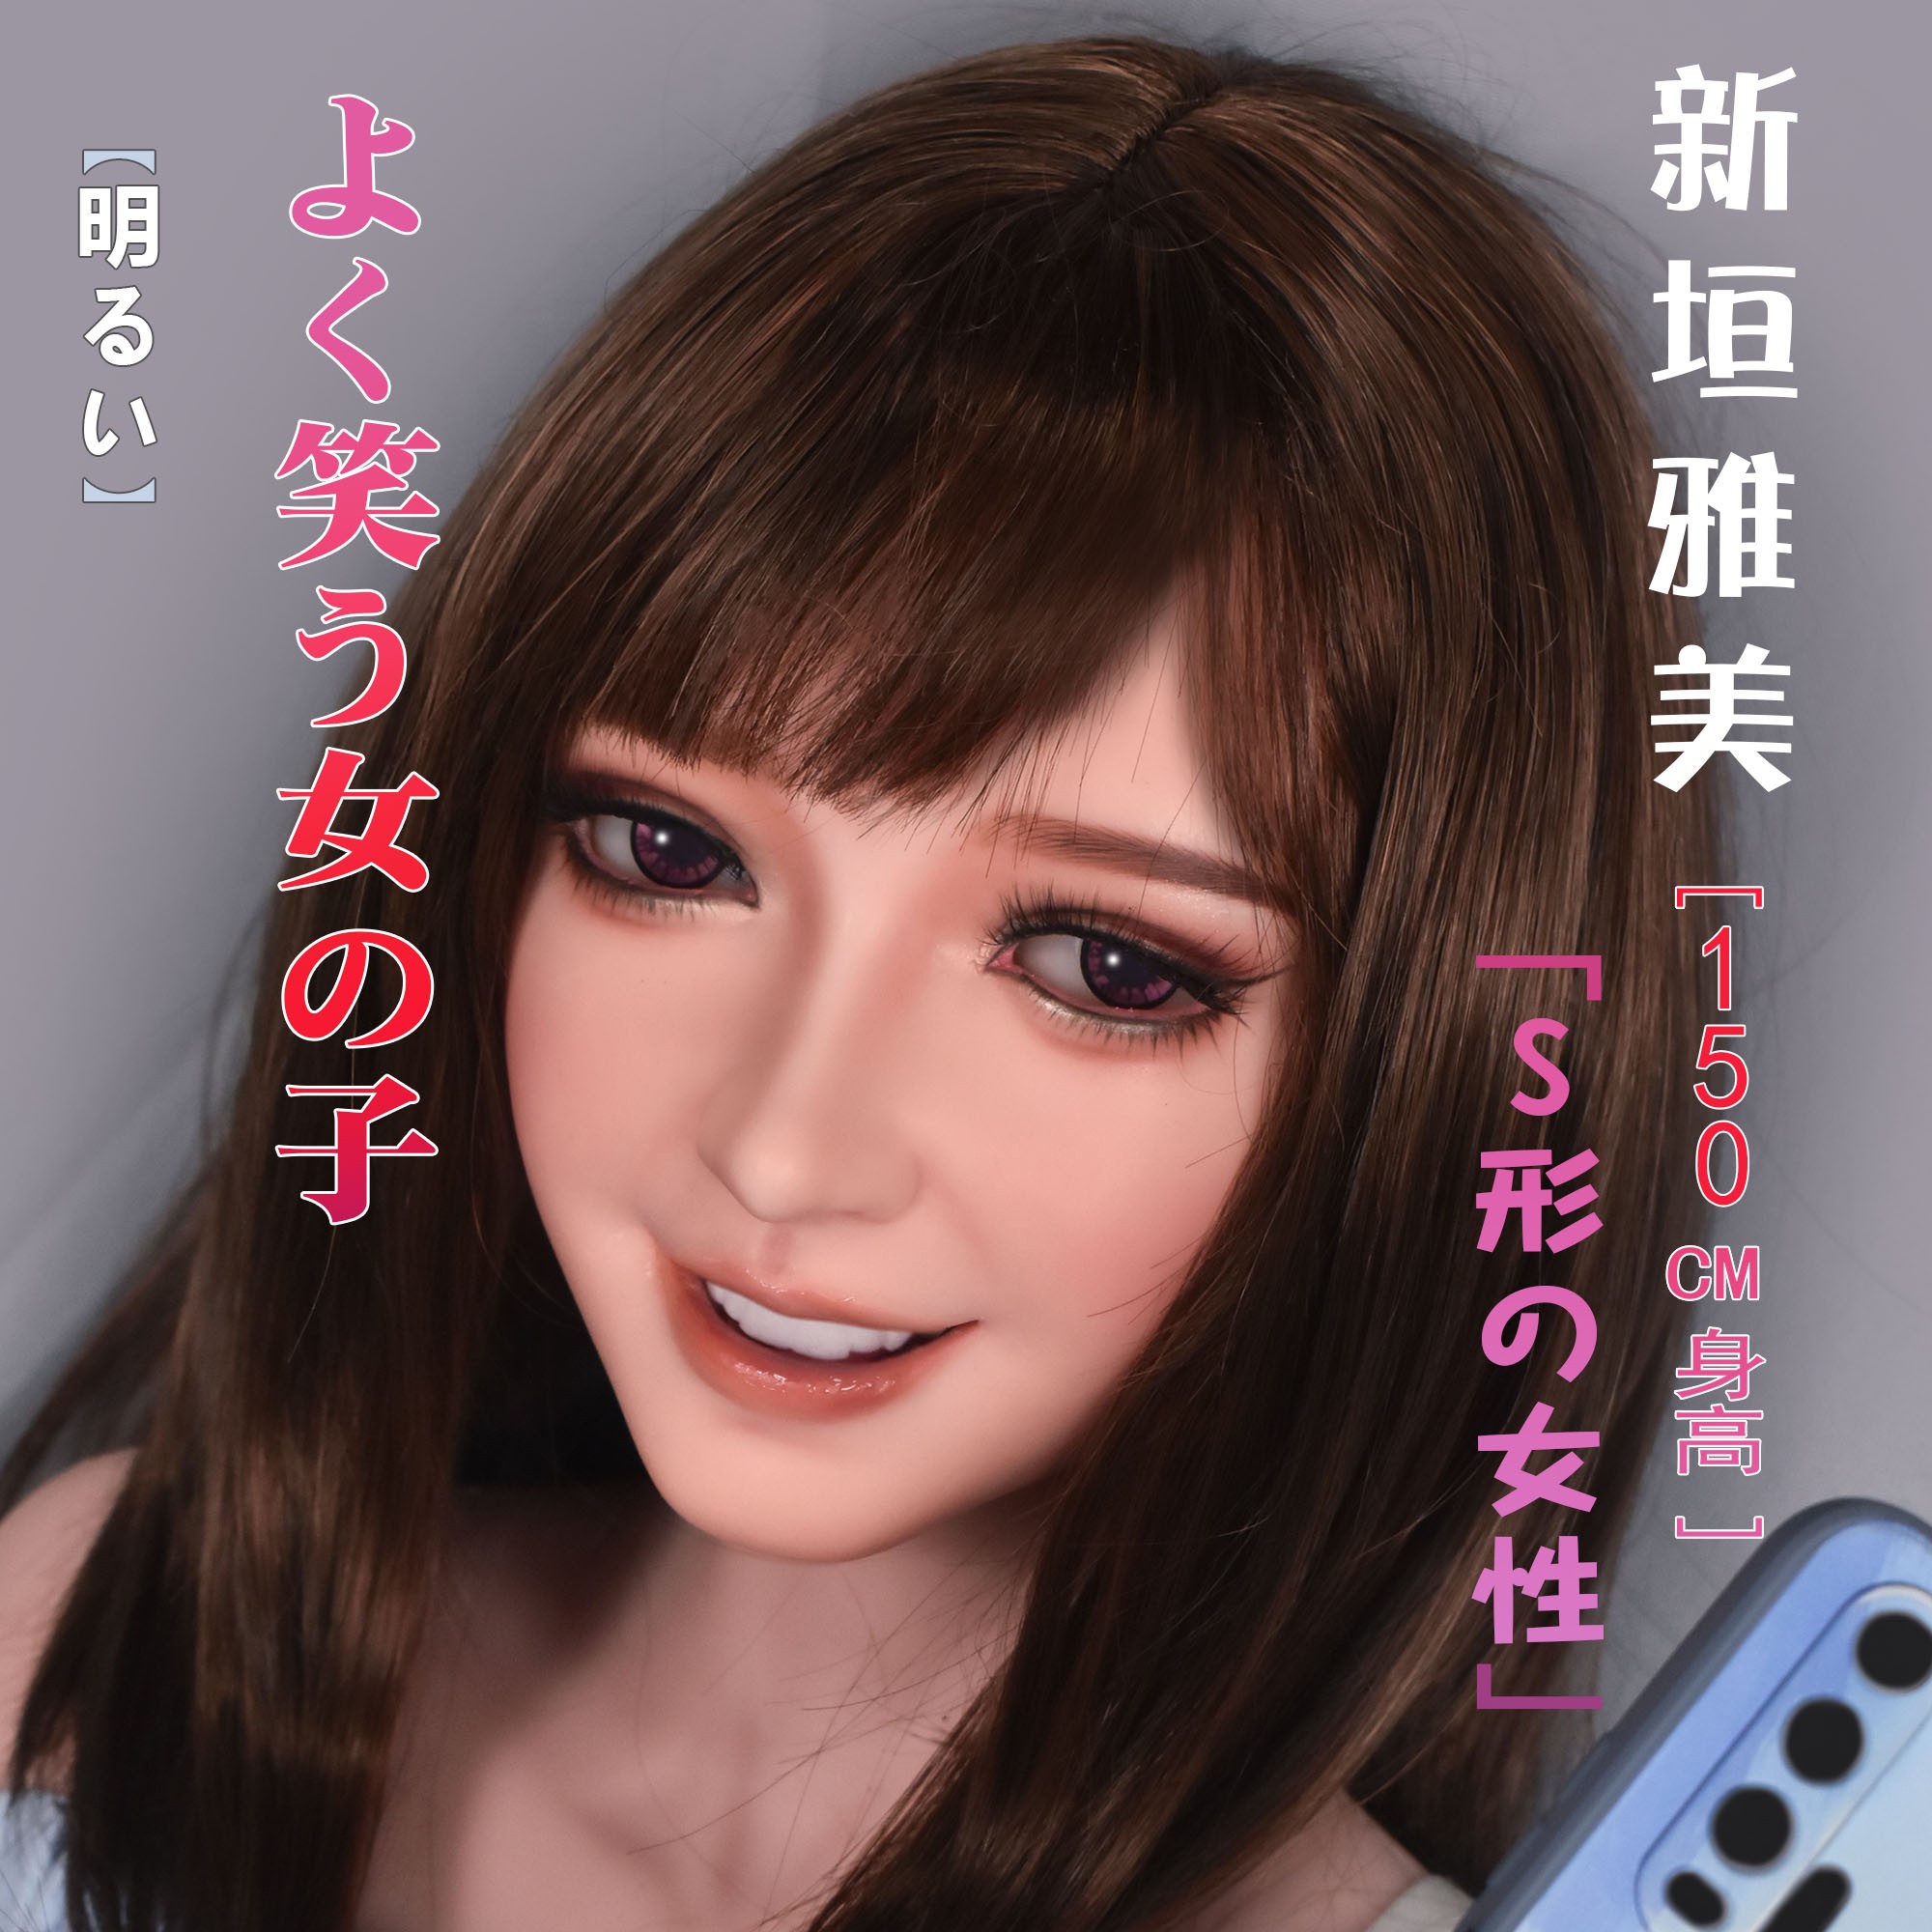 ElsaBabe Head of 150cm Platinum Silicone Sex Doll, Aragaki Nagasawa